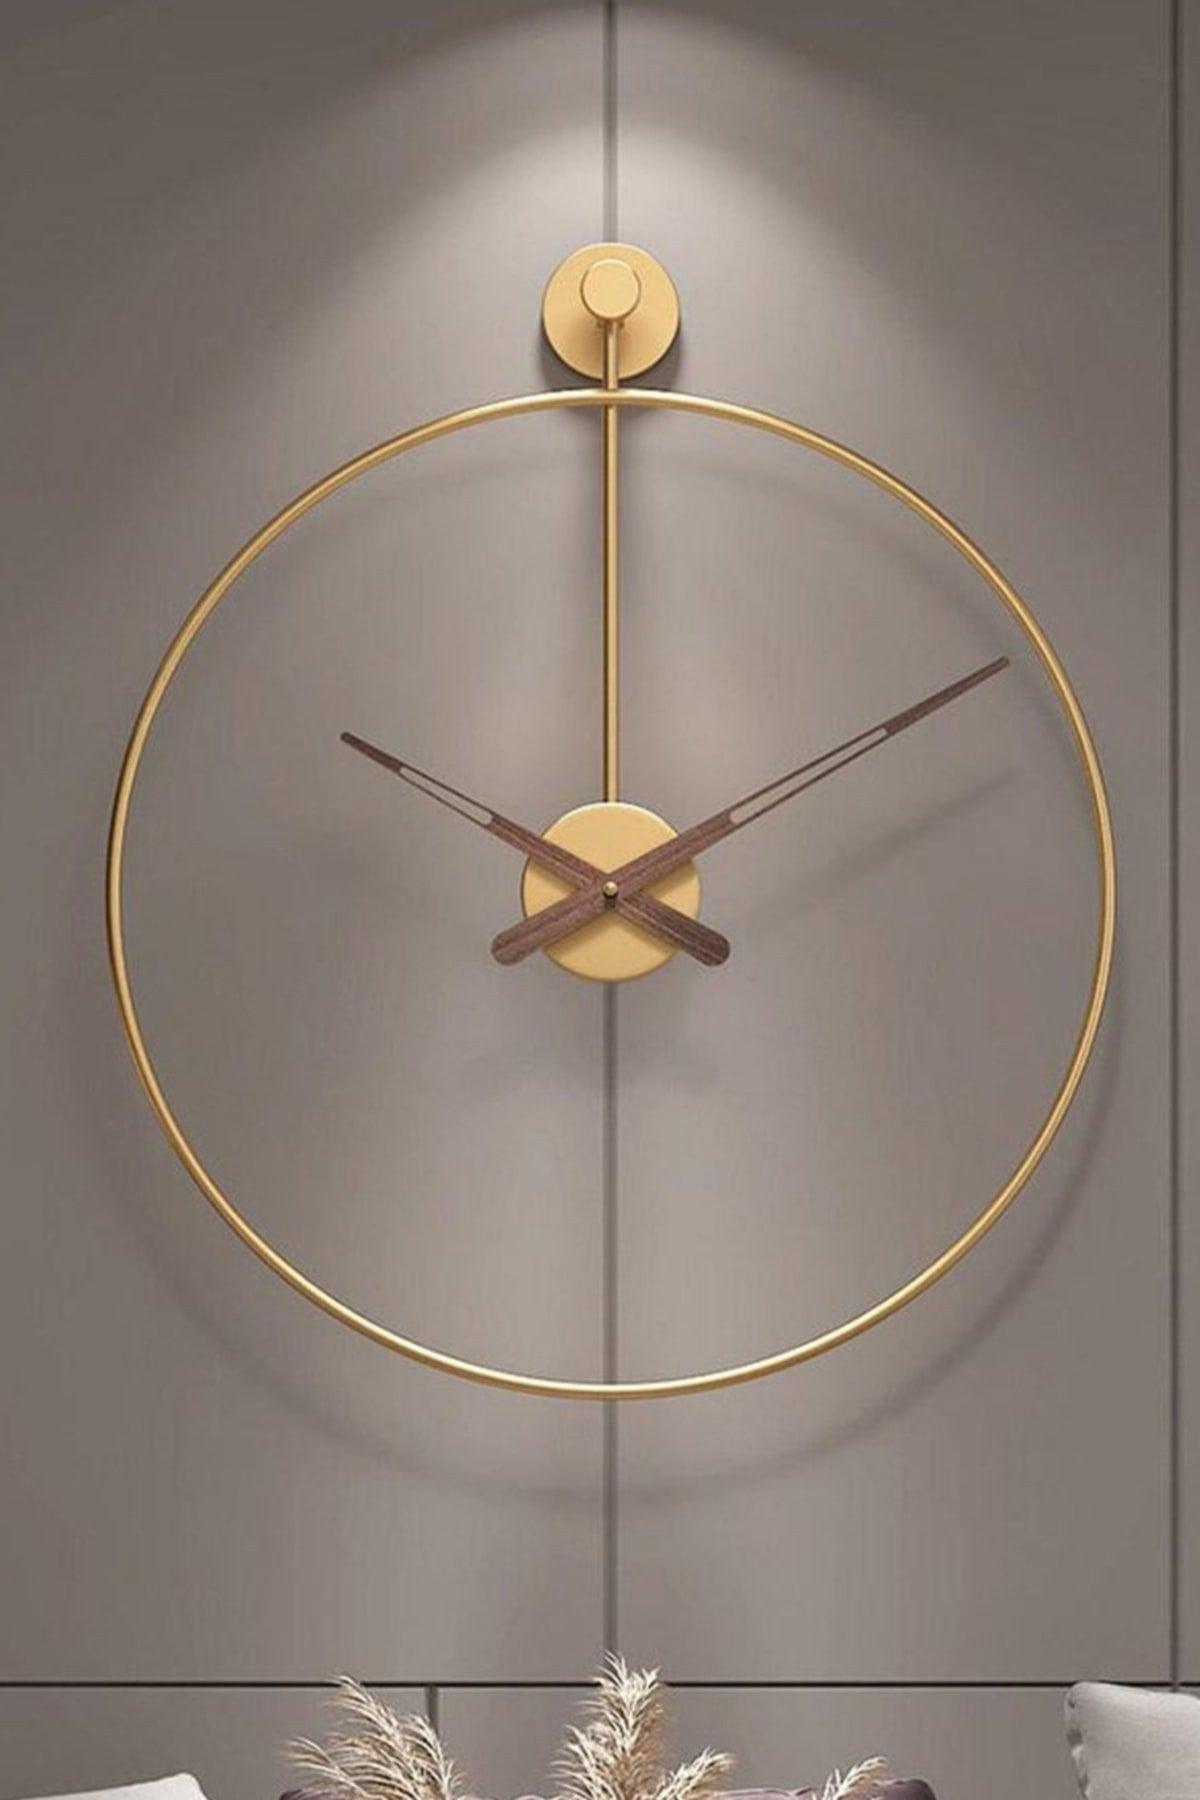 Modern Decorative Pendulum Tiktok Tumbled Gold Metal Wall Clock 60 Cm - Swordslife